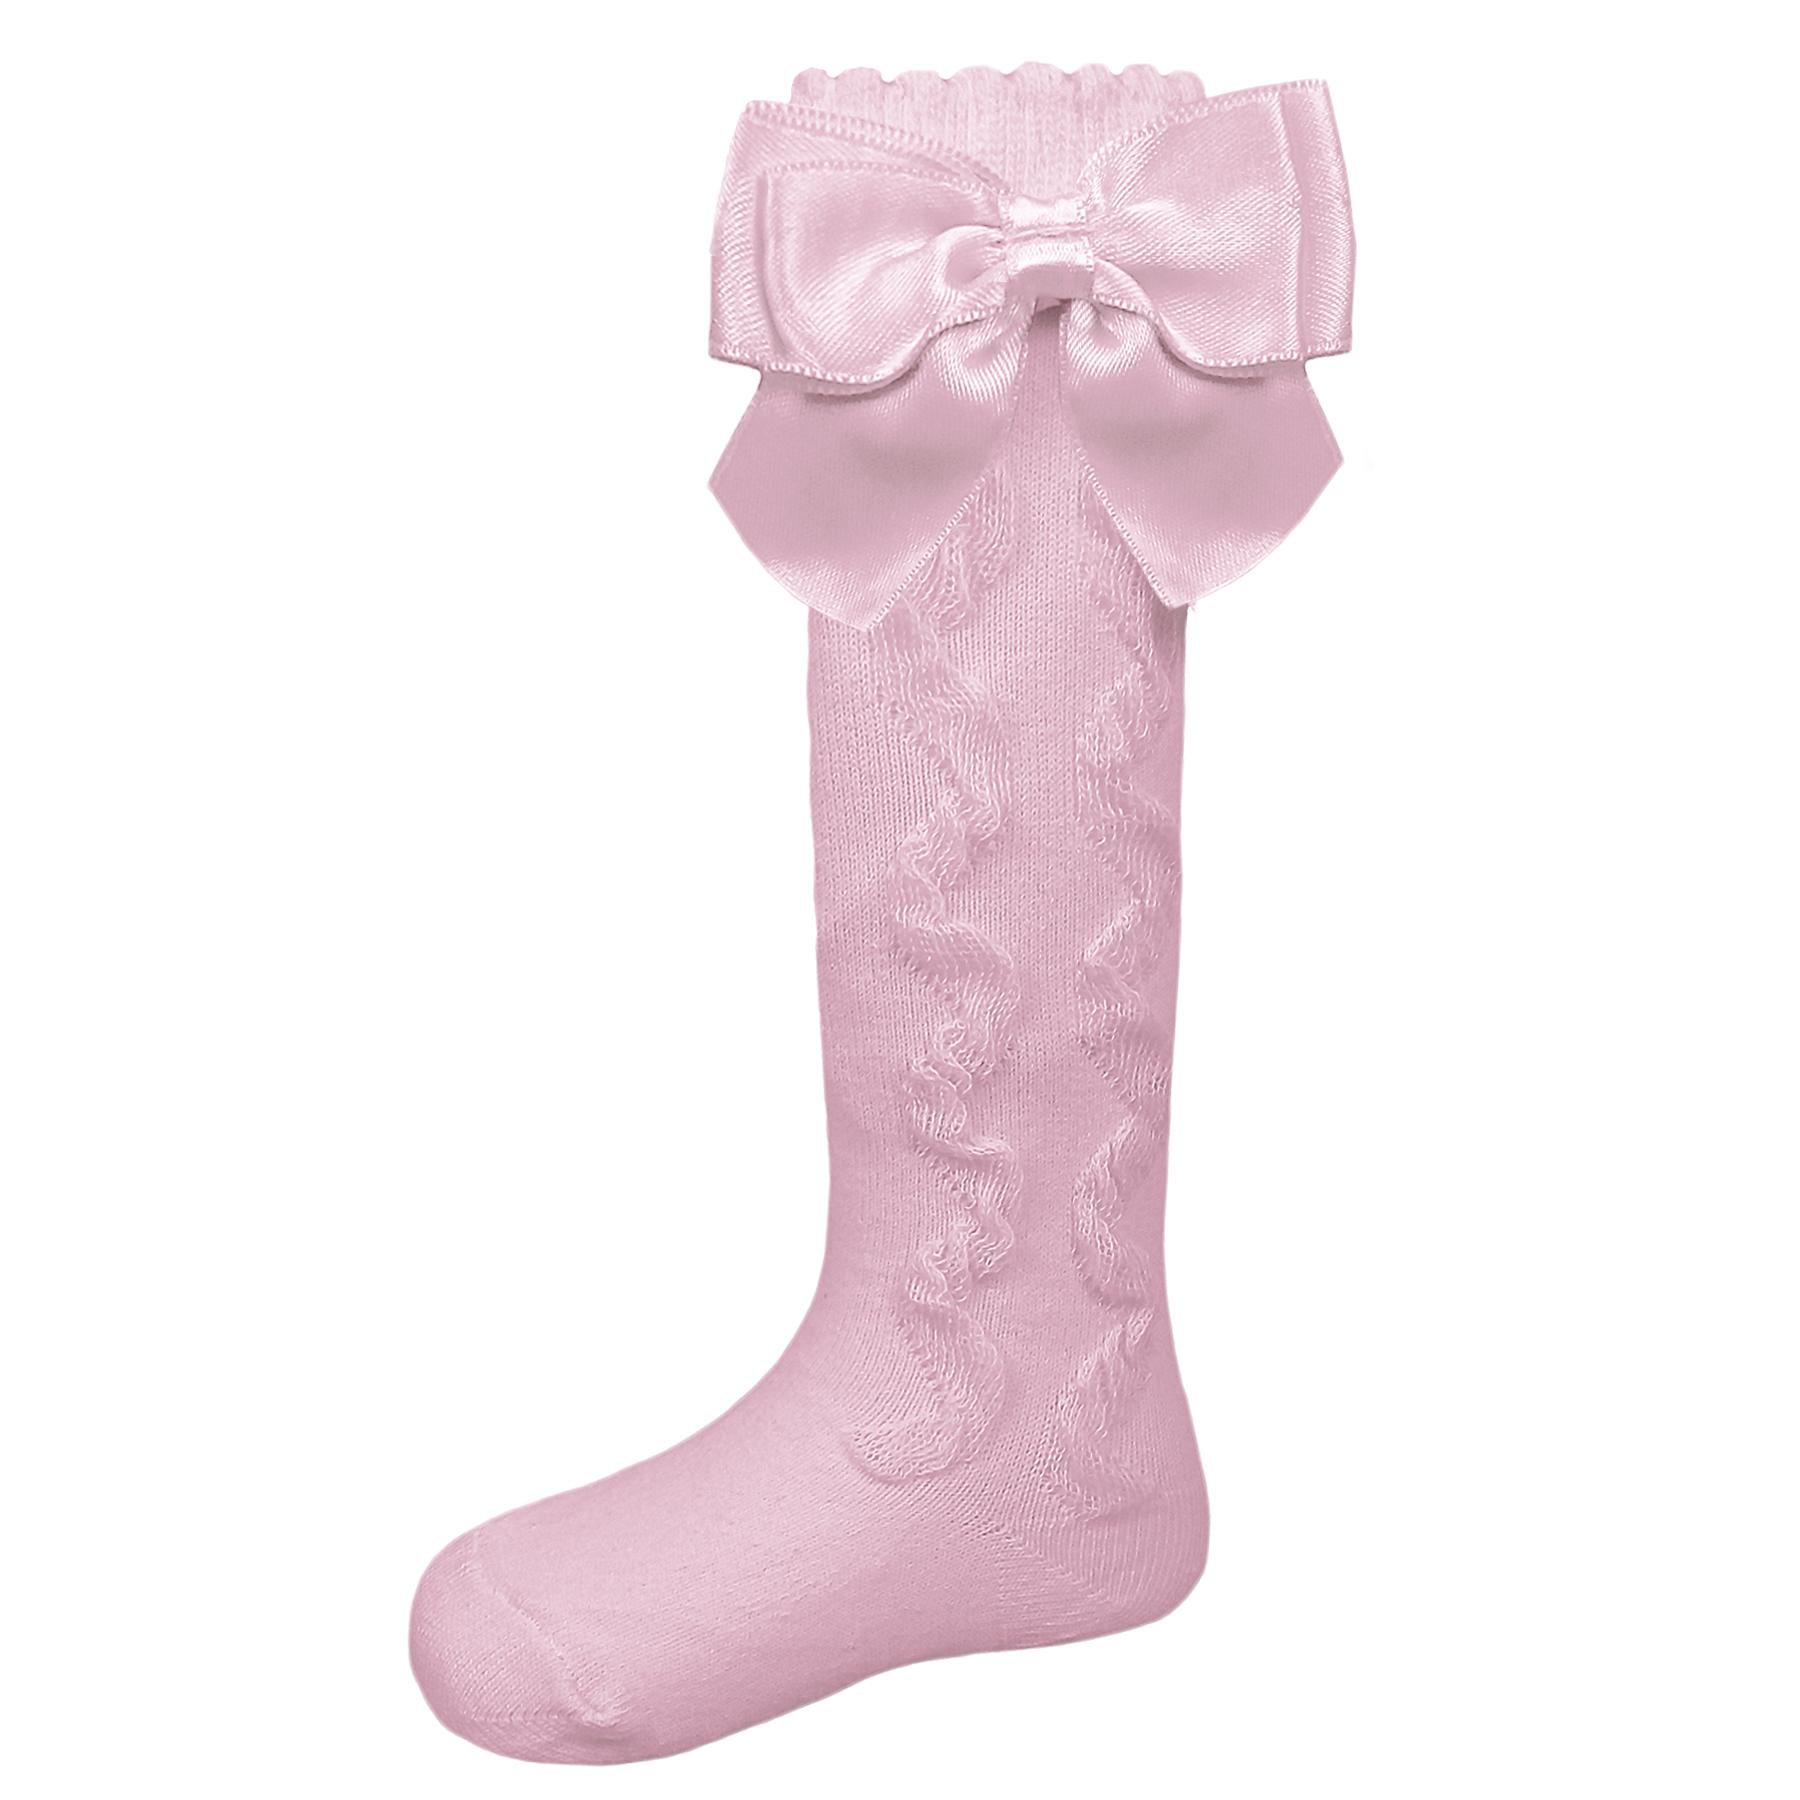 Pex Kids Grazia Knee High Side Bow Ruffle Socks in Pink